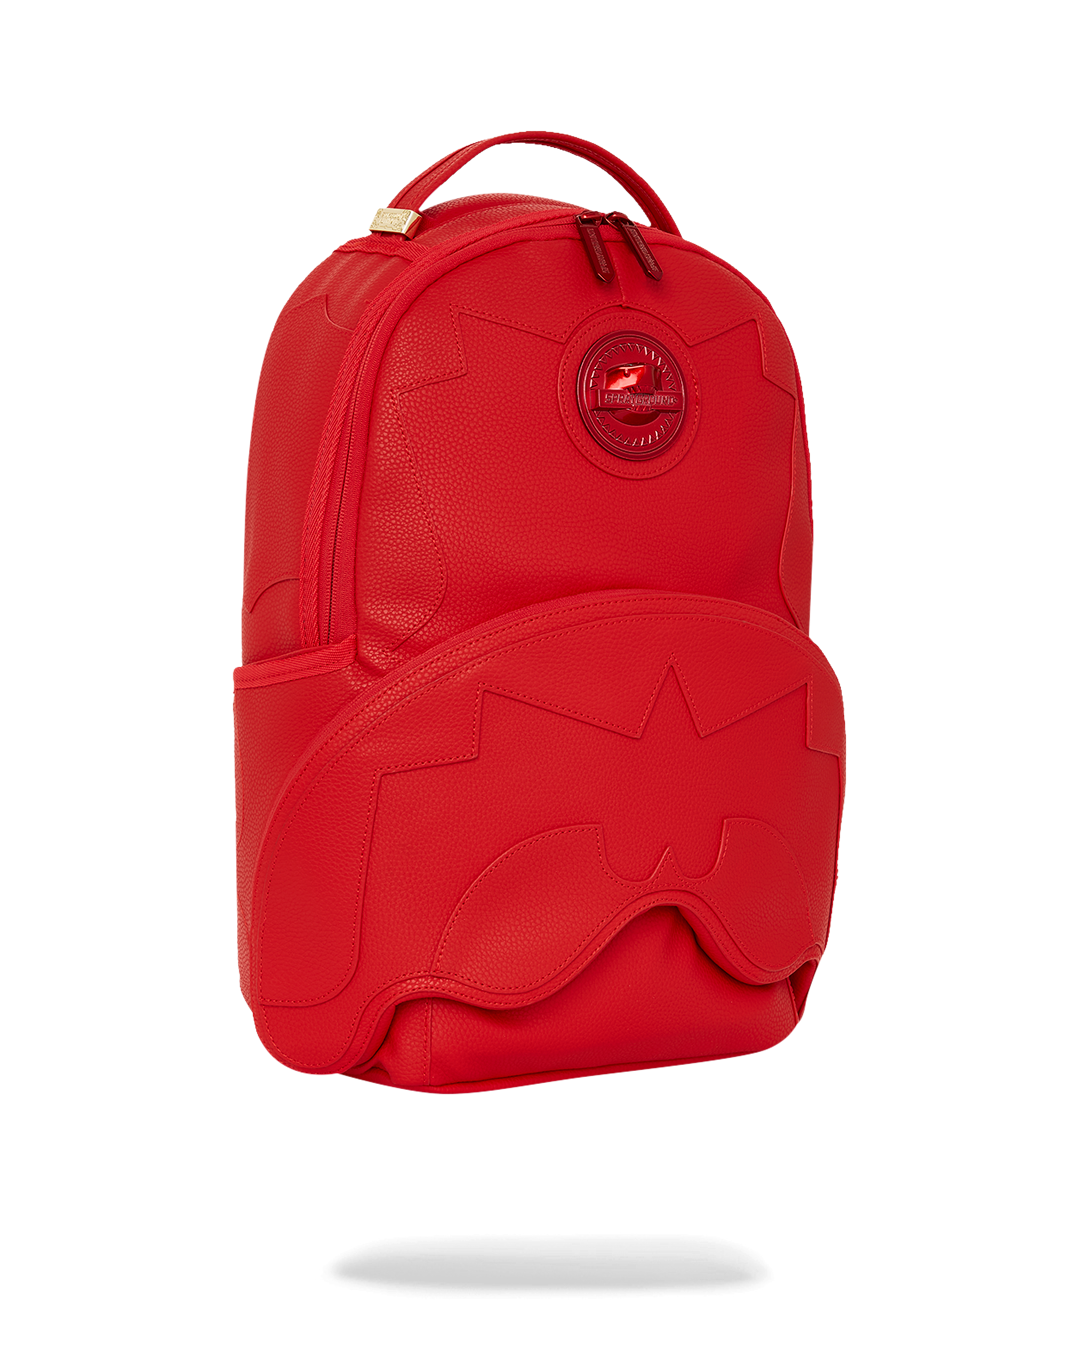 Sprayground - Heavy Metal Shark Red Backpack